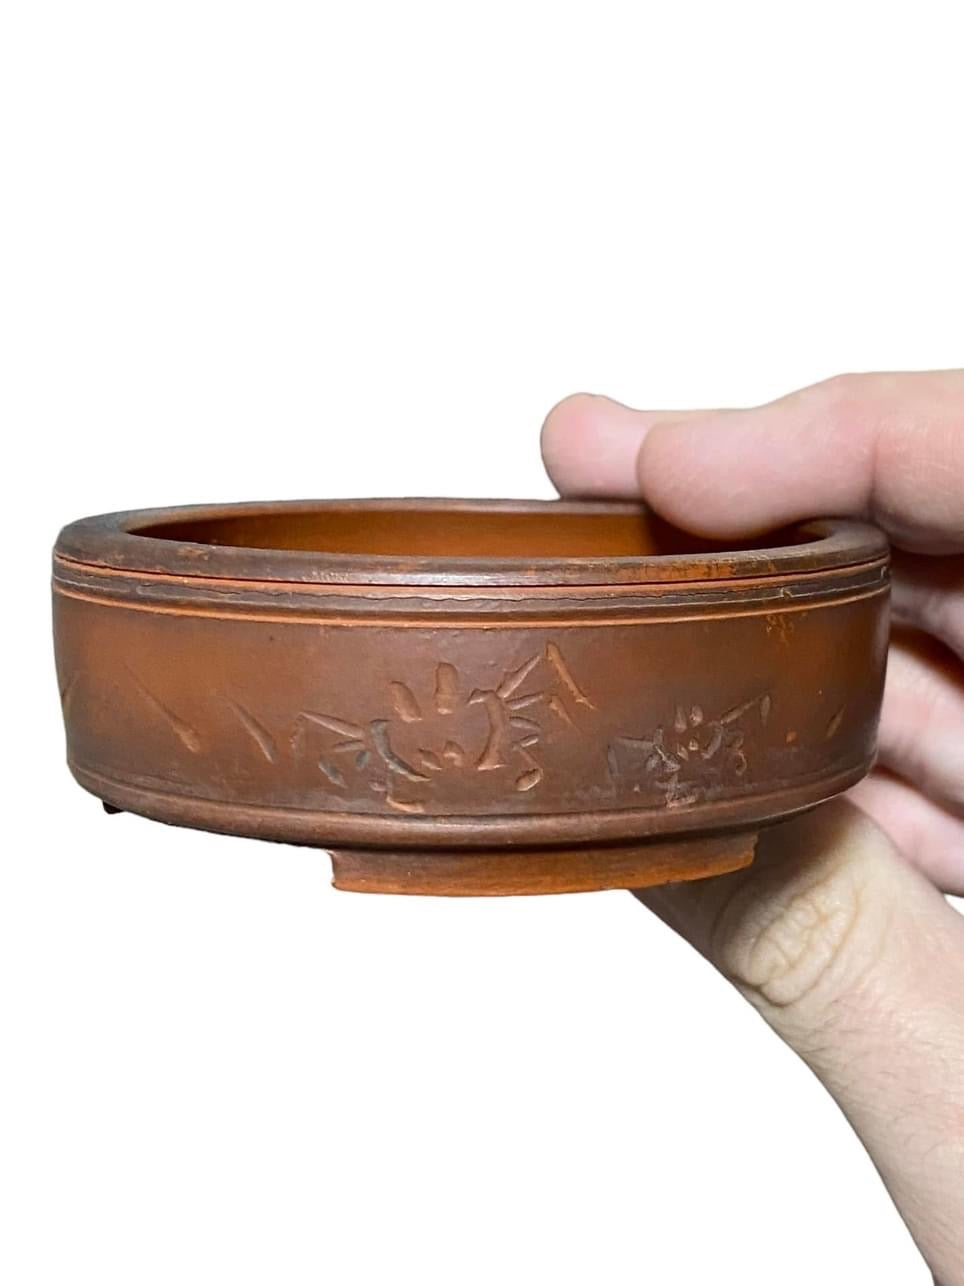 Deiju - Carved Drum Style Bonsai or Accent Pot